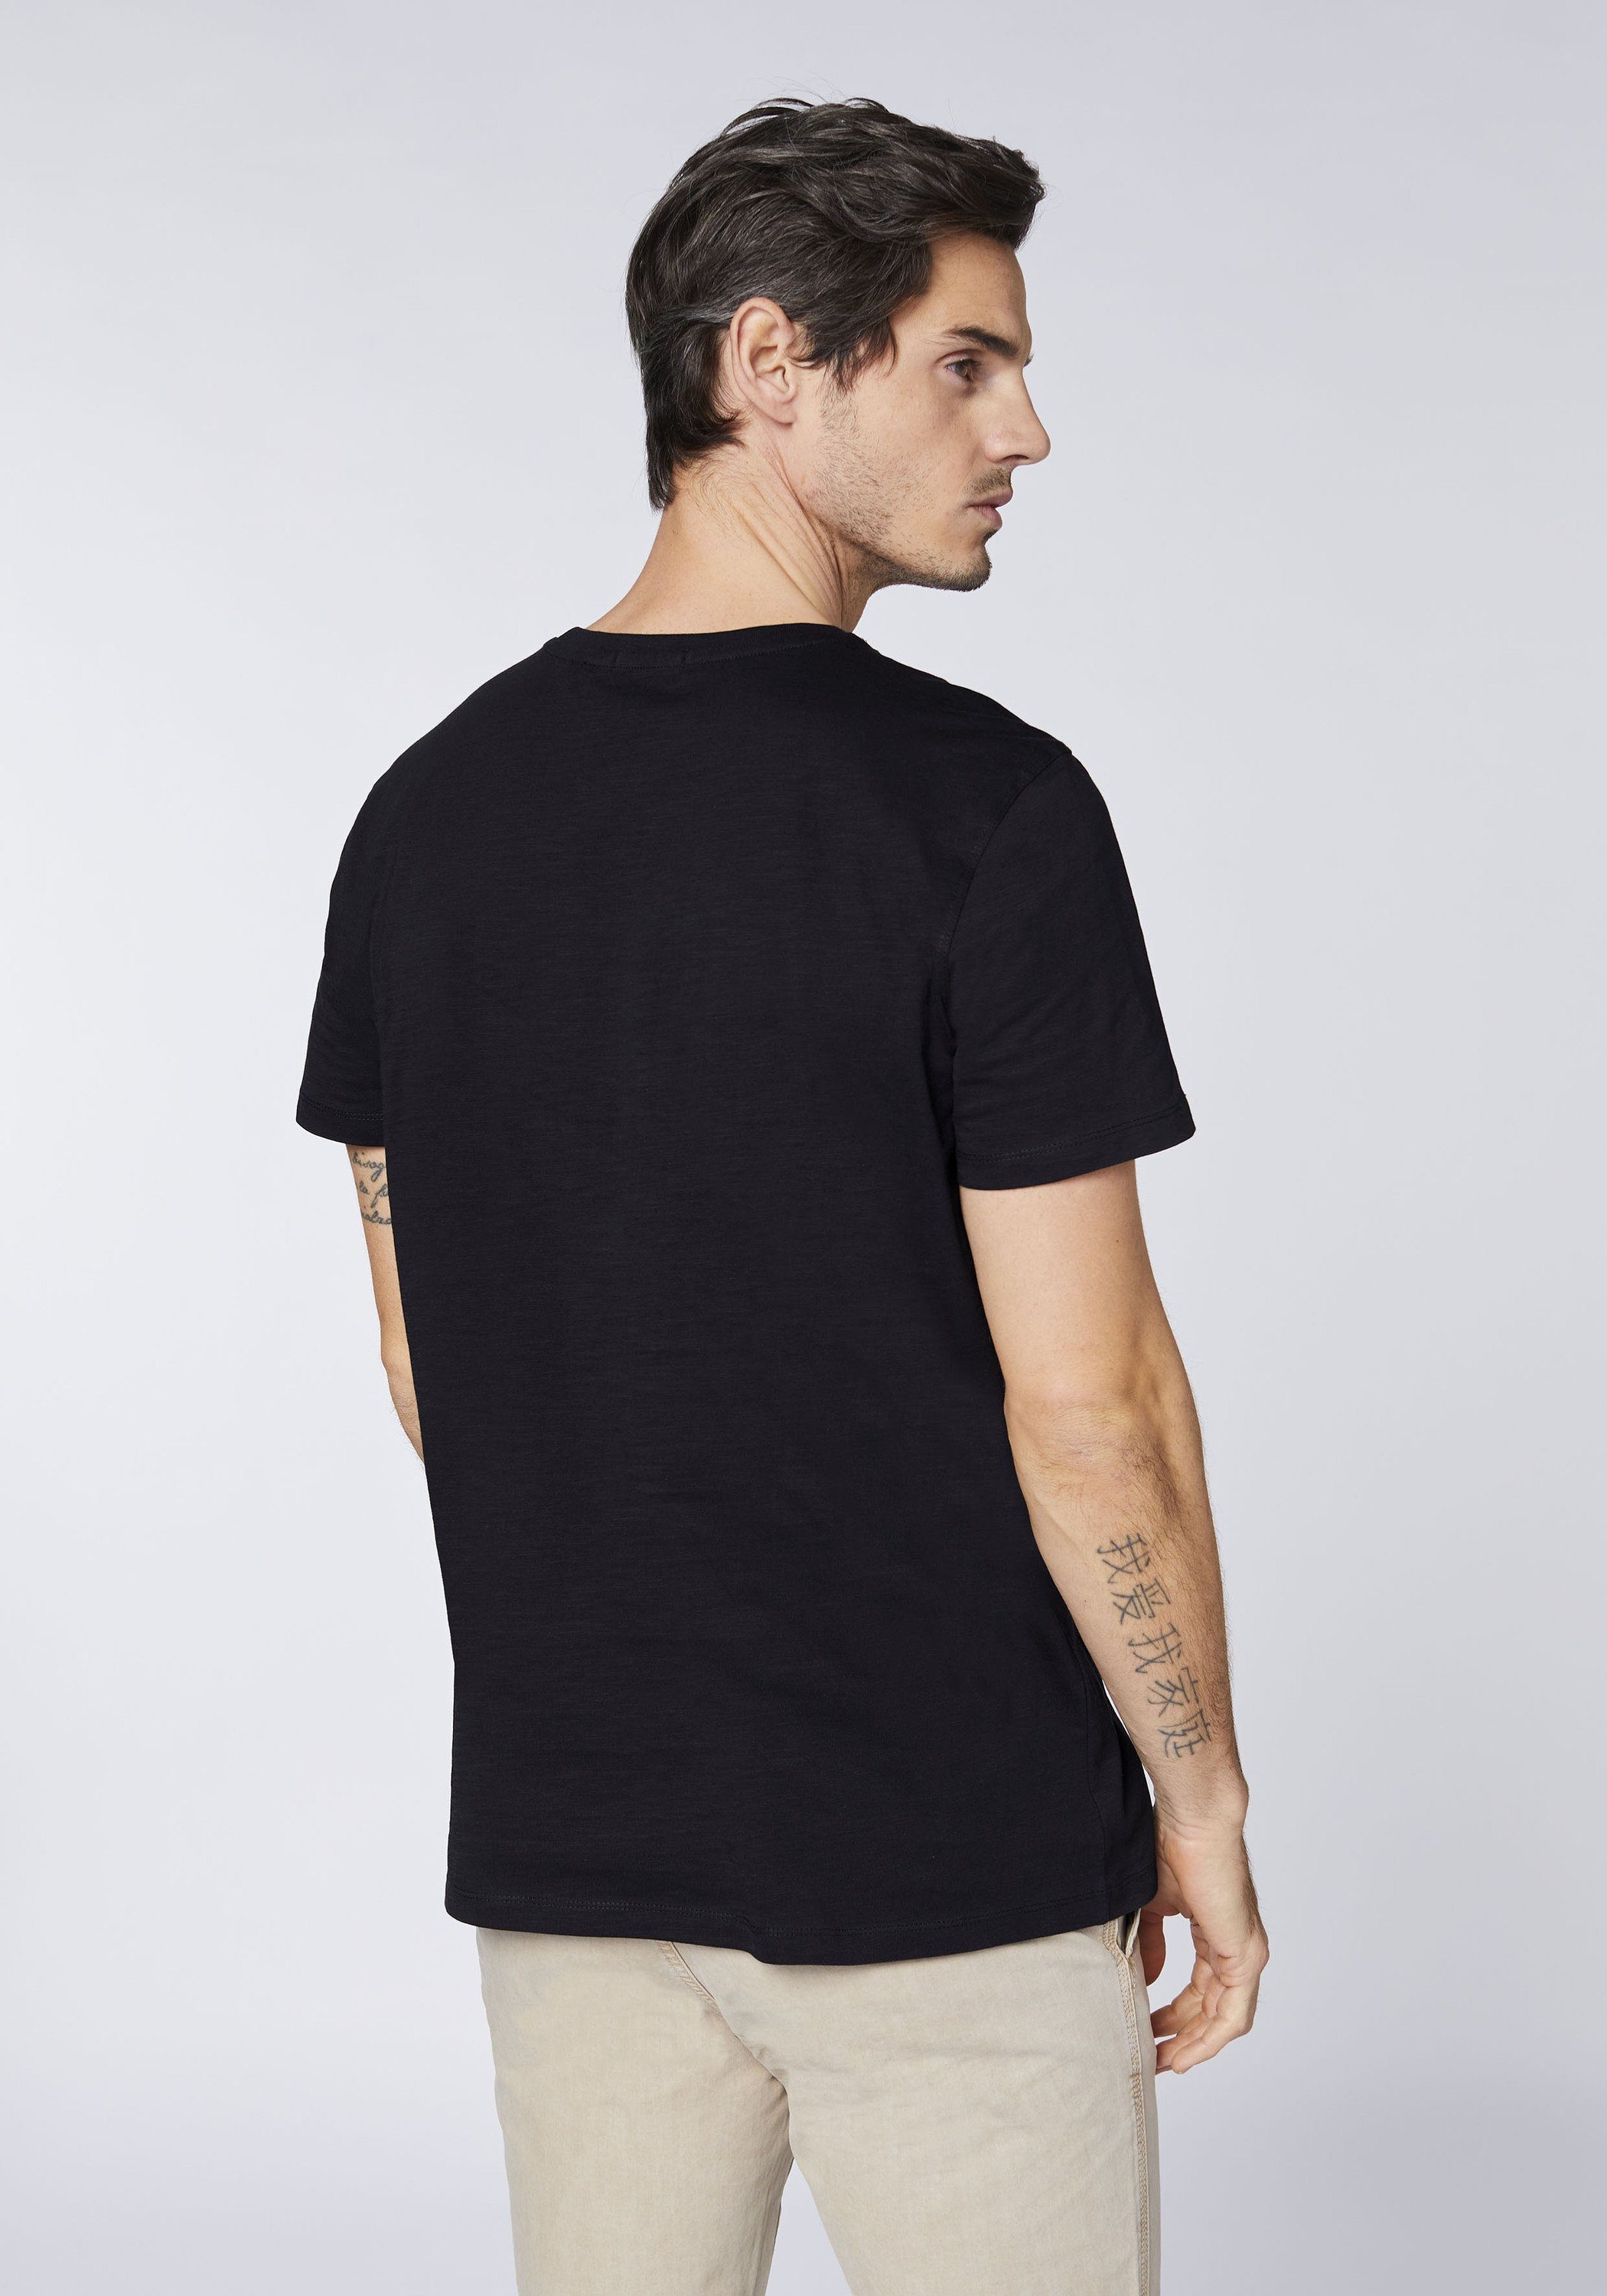 Chiemsee Print-Shirt Black T-Shirt Deep